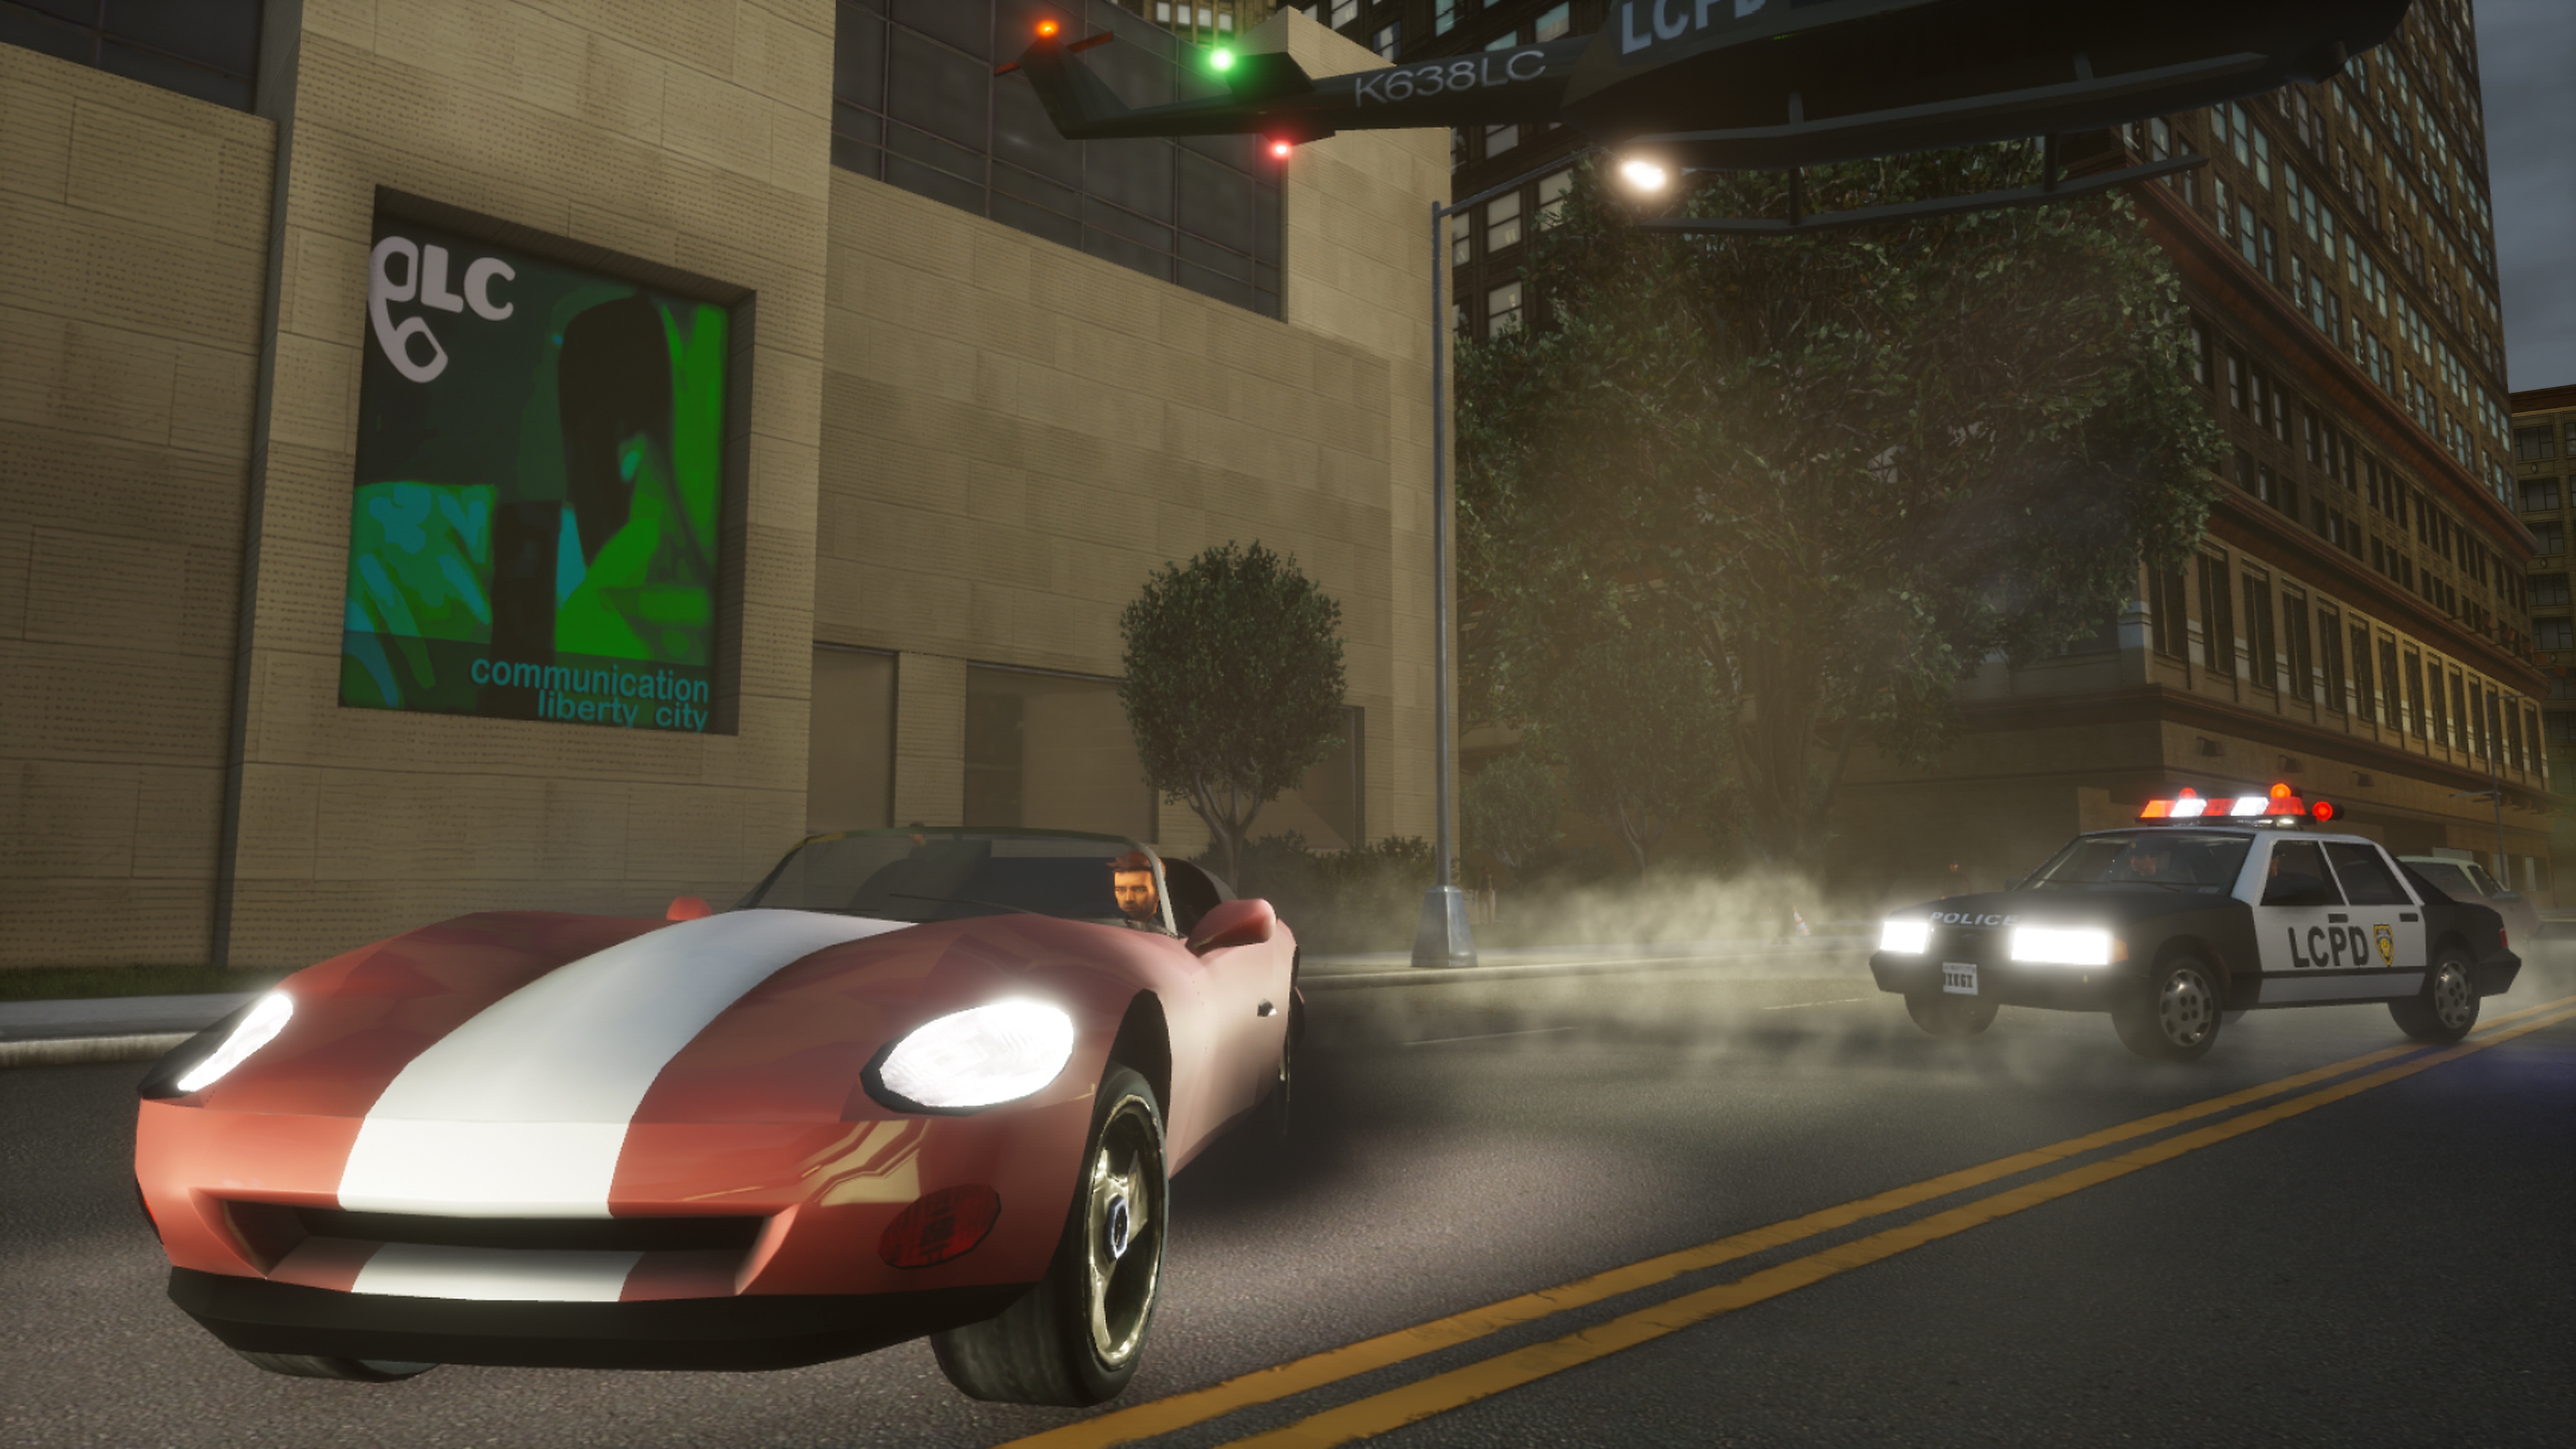  Grand Theft Auto III – снимок экрана 3 из галереи